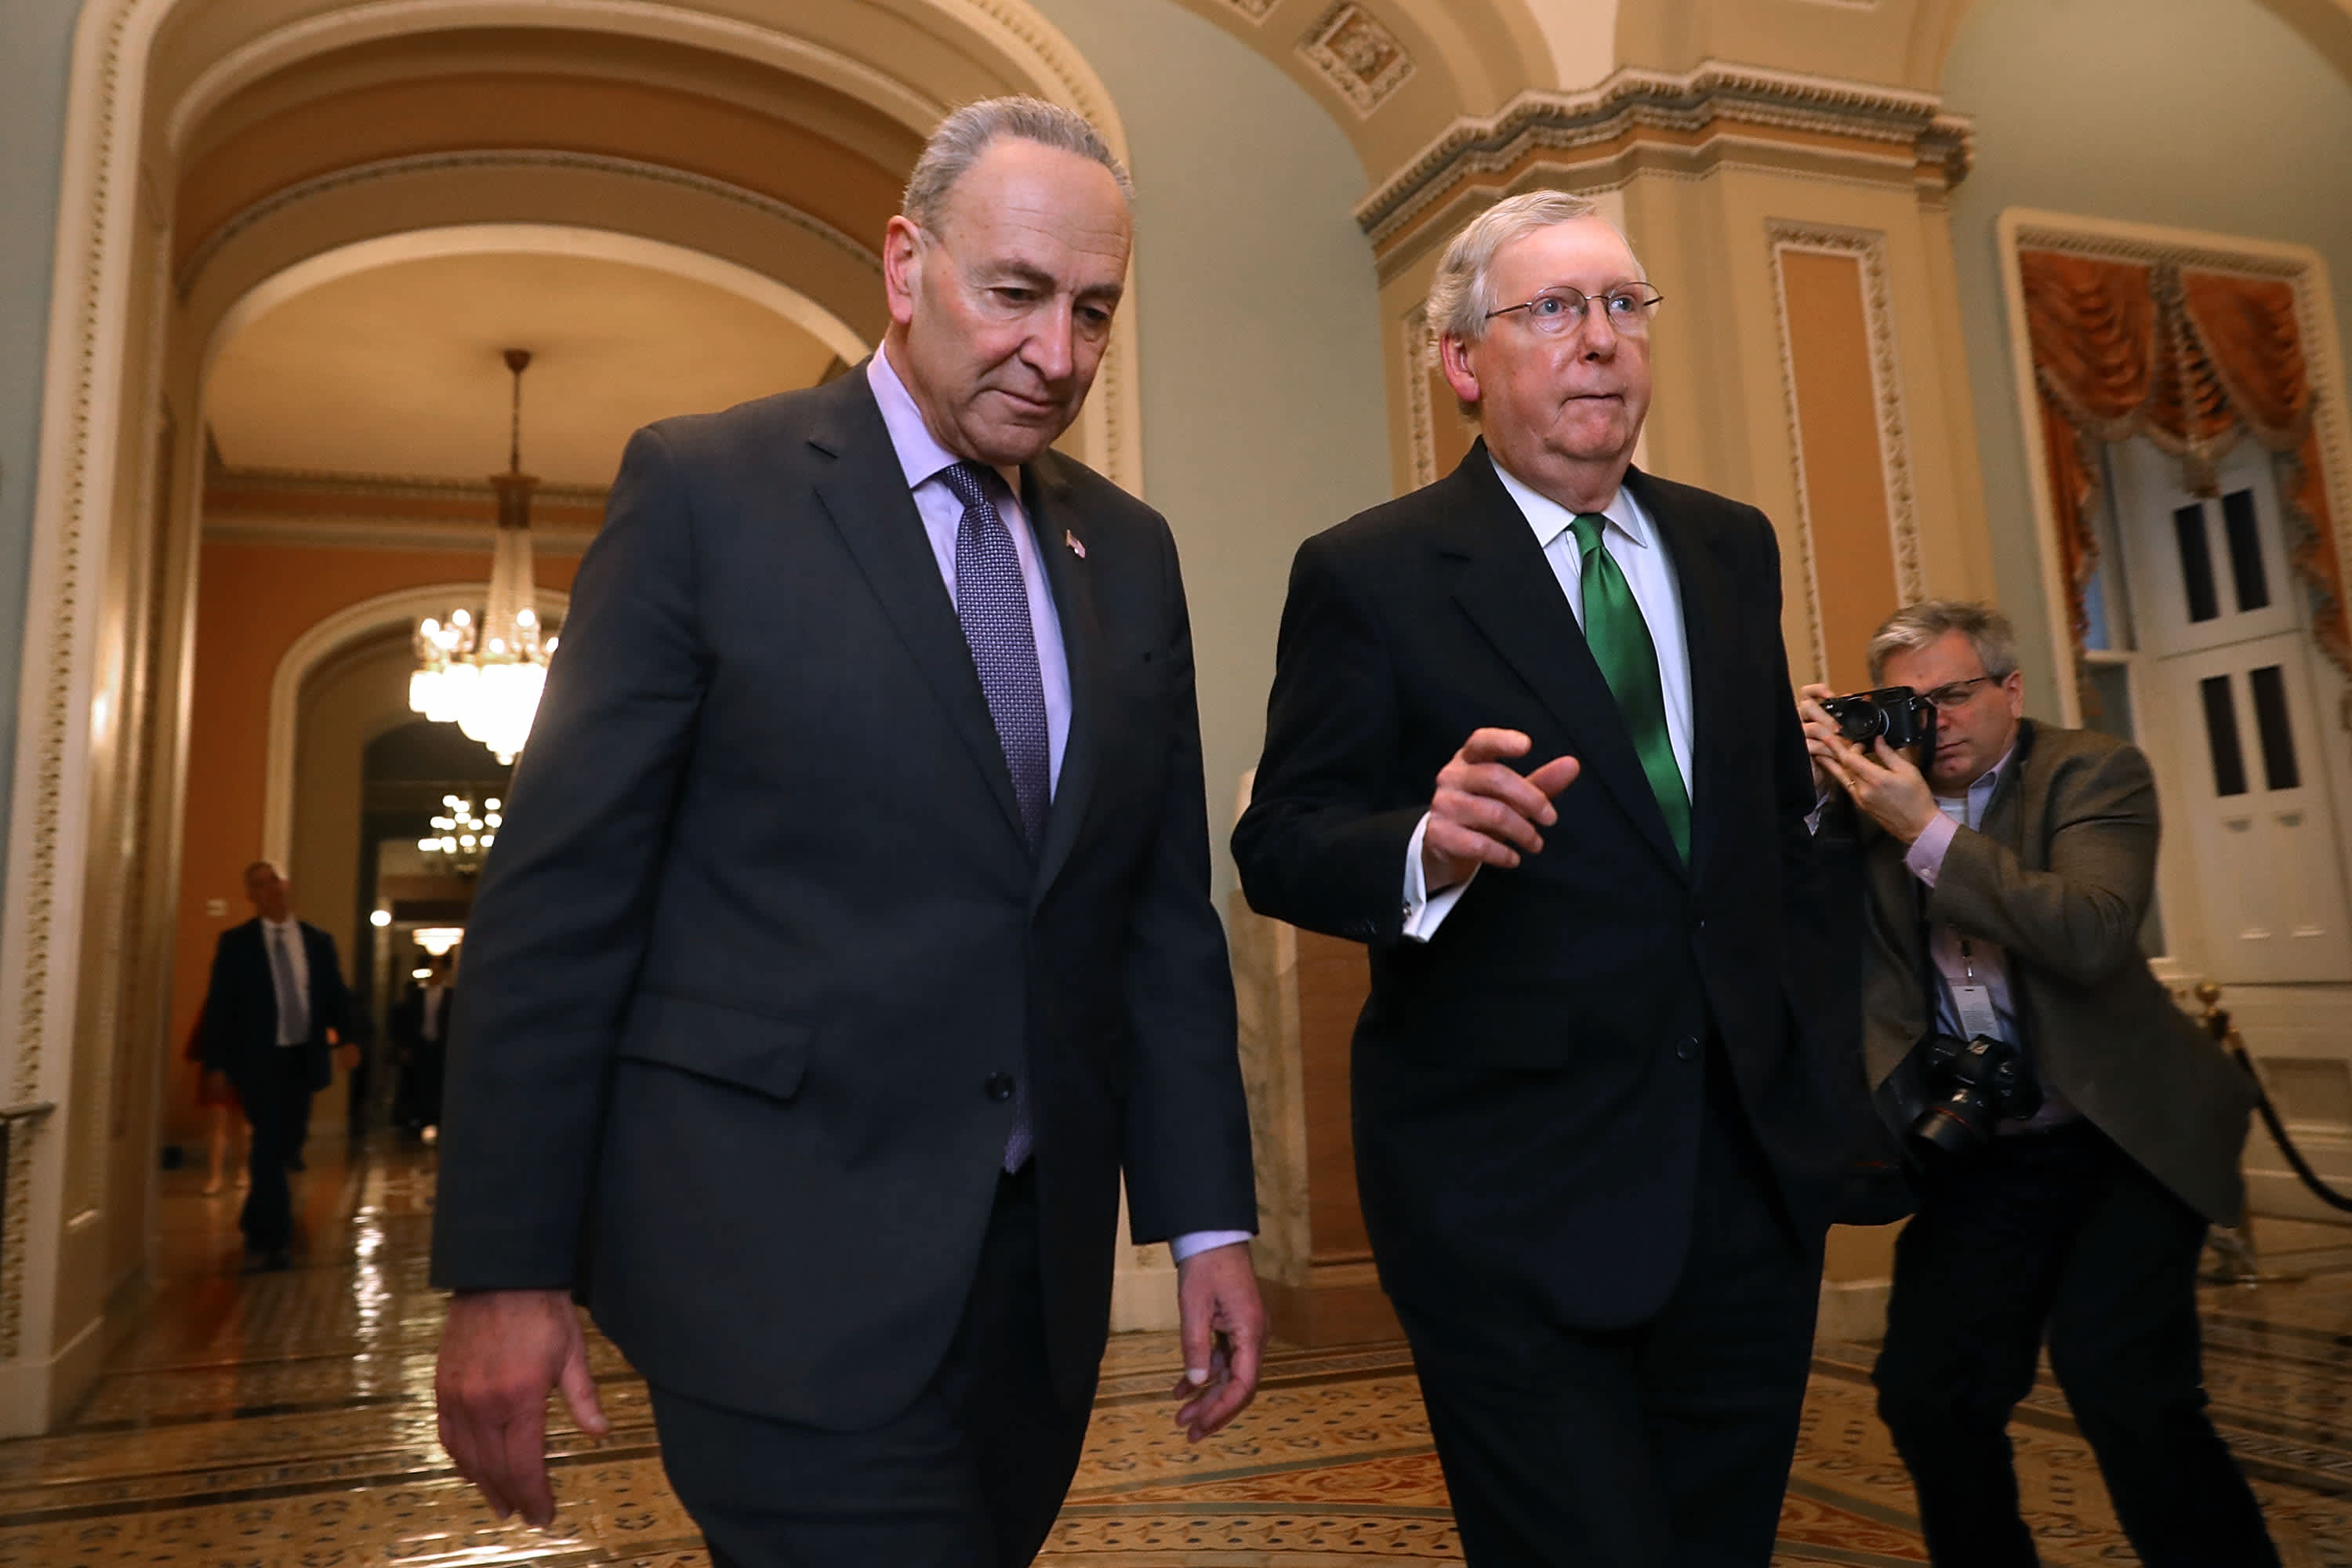 Lawmakers have a deal on a short-term debt ceiling increase, Senate Majority Lea..